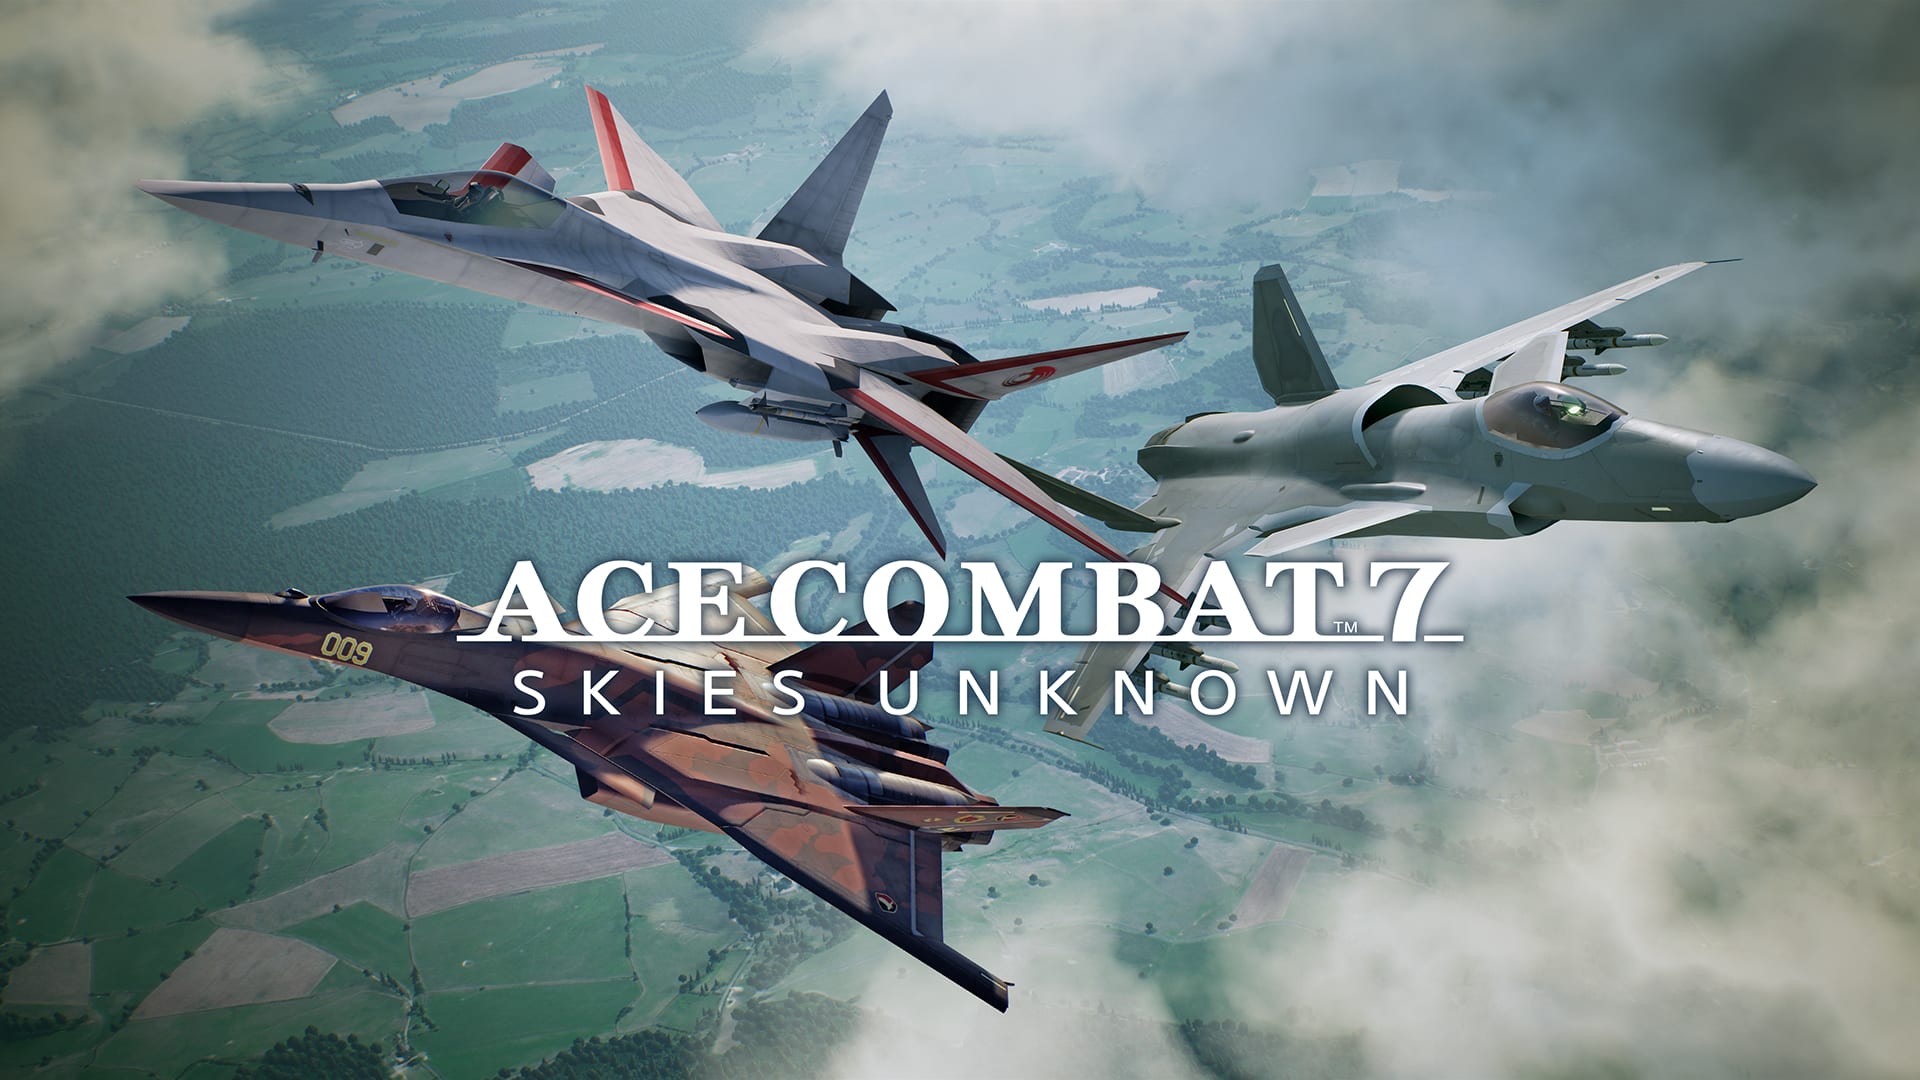 ACE COMBAT™ 7: SKIES UNKNOWN - Série de Aeronaves Originais - Conjunto